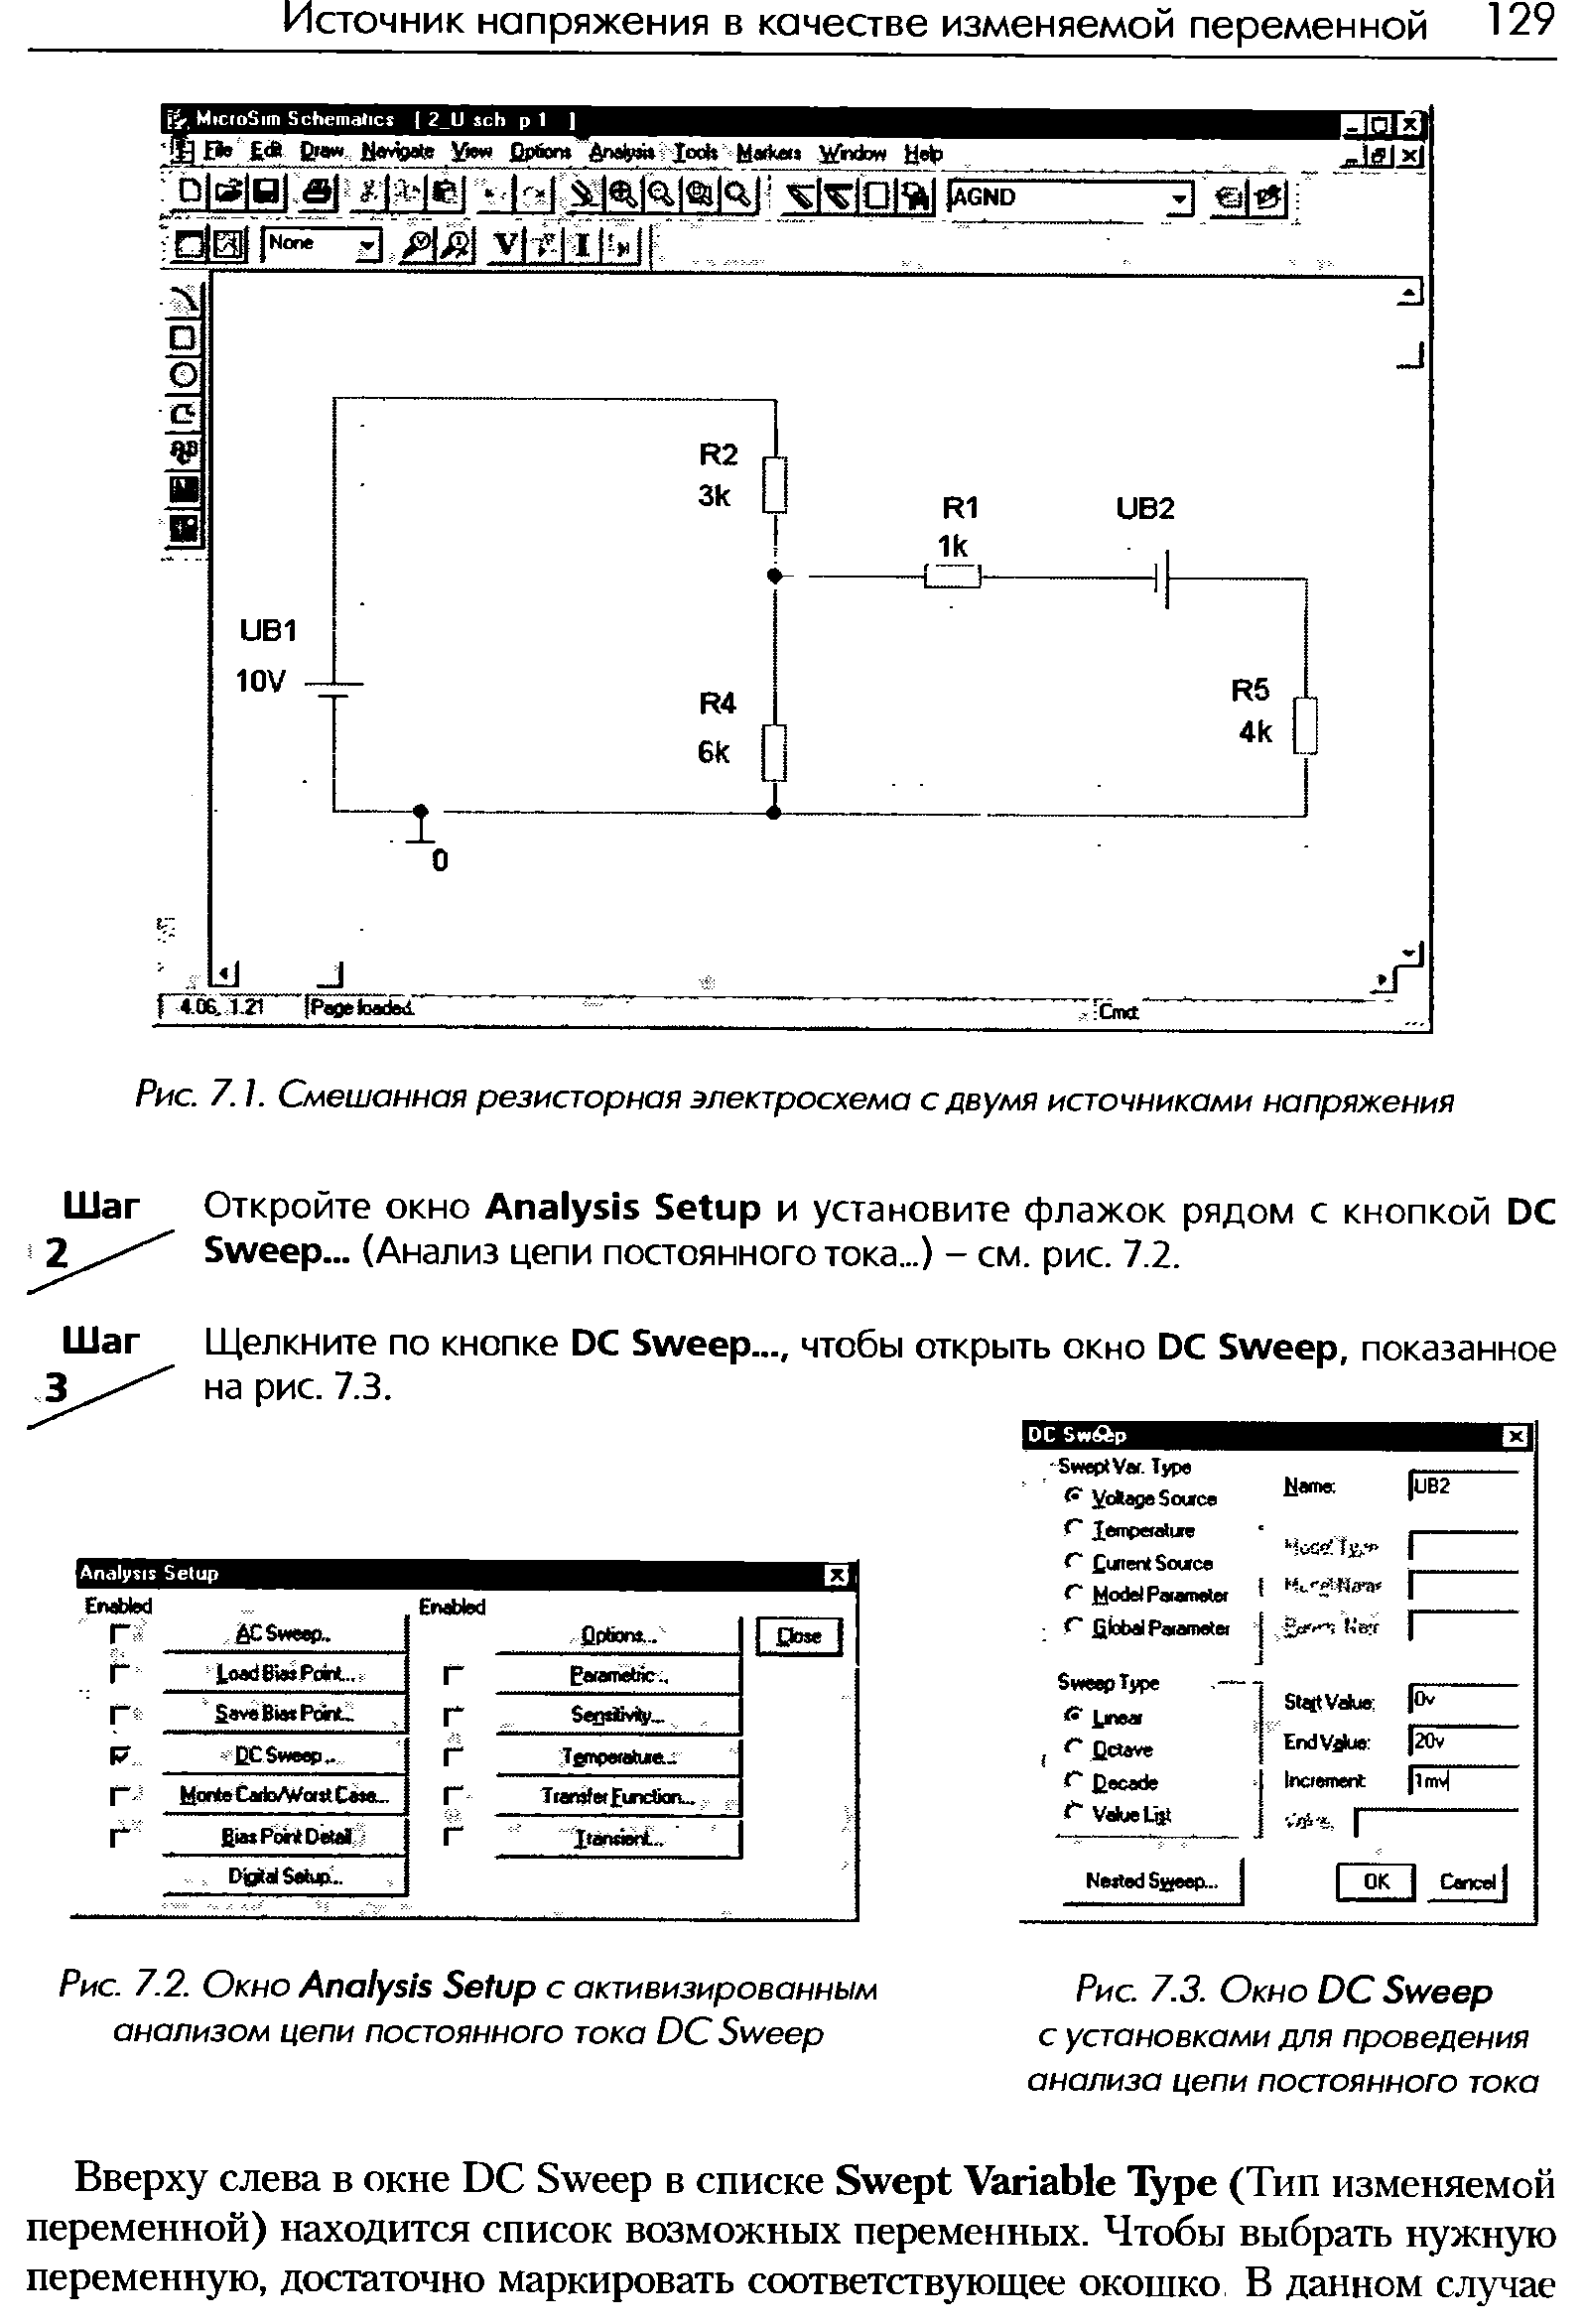 Рис. 7.3. Окно D Sweep с установками для проведения анализа <a href="/info/197359">цепи постоянного</a> тока
